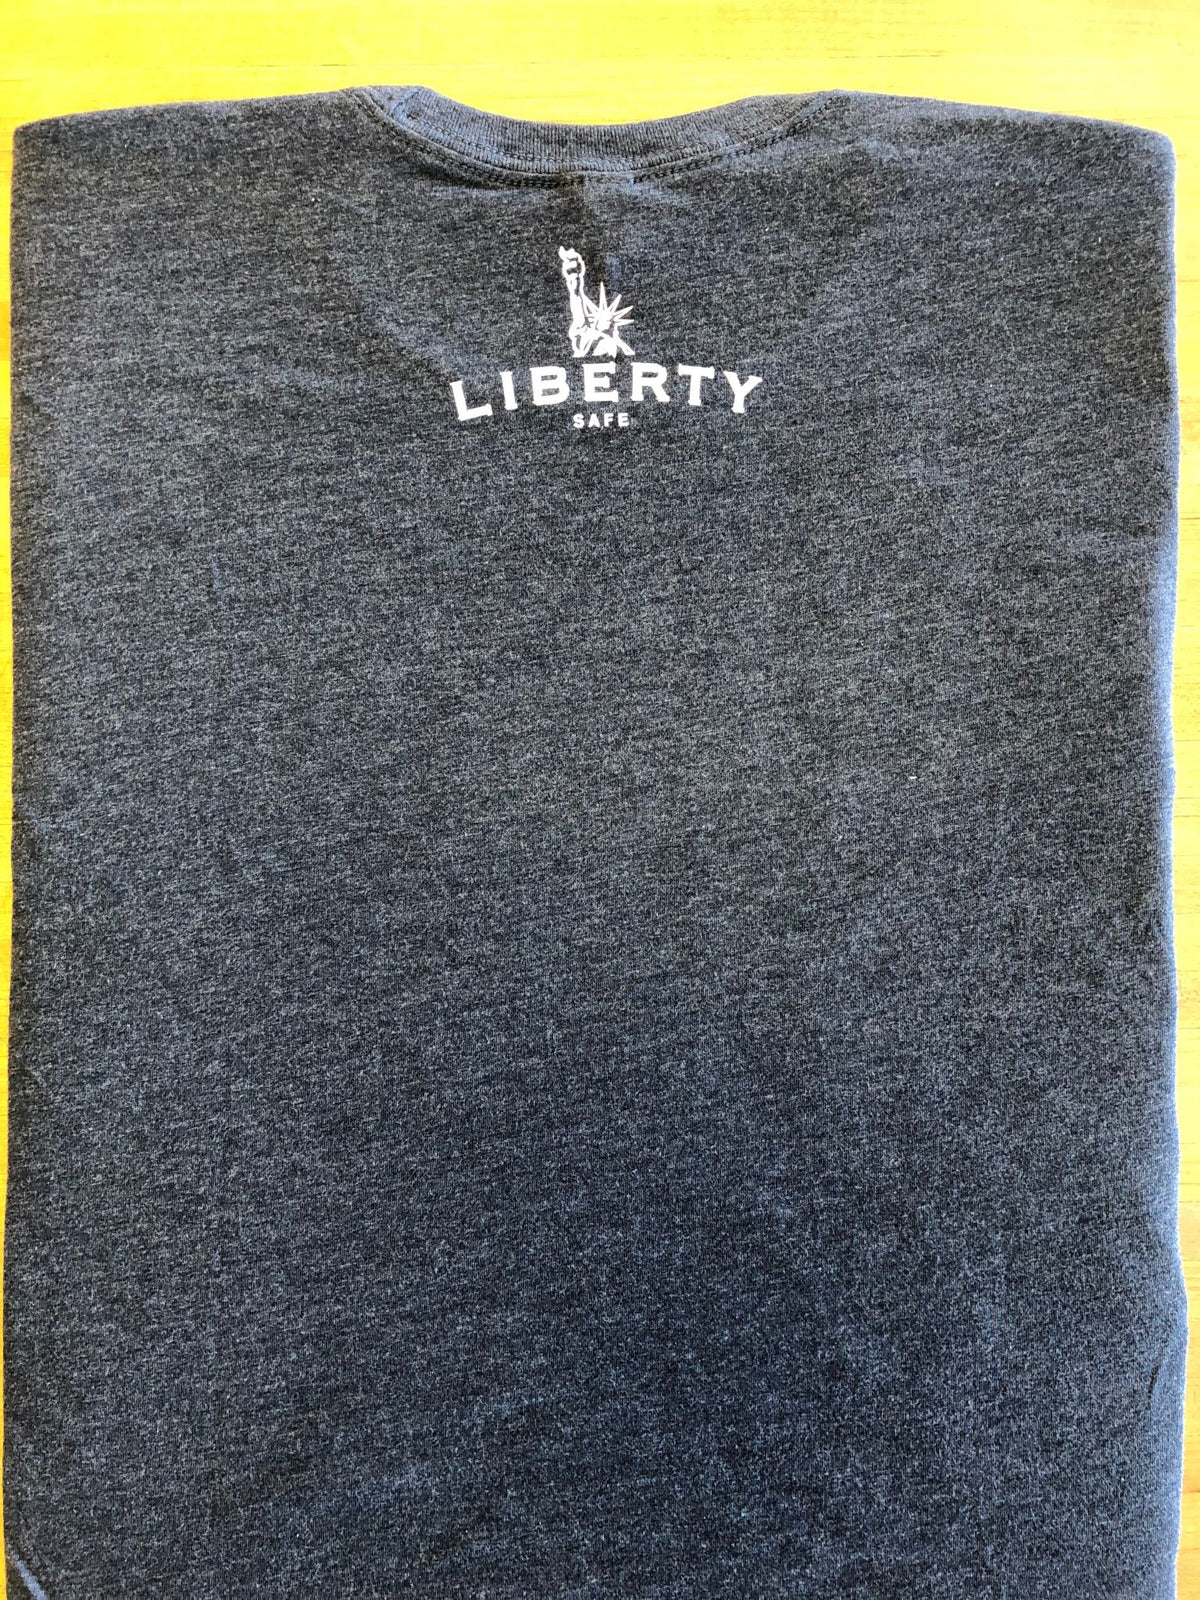 Liberty Flag - Bomb City Safes T-Shirt